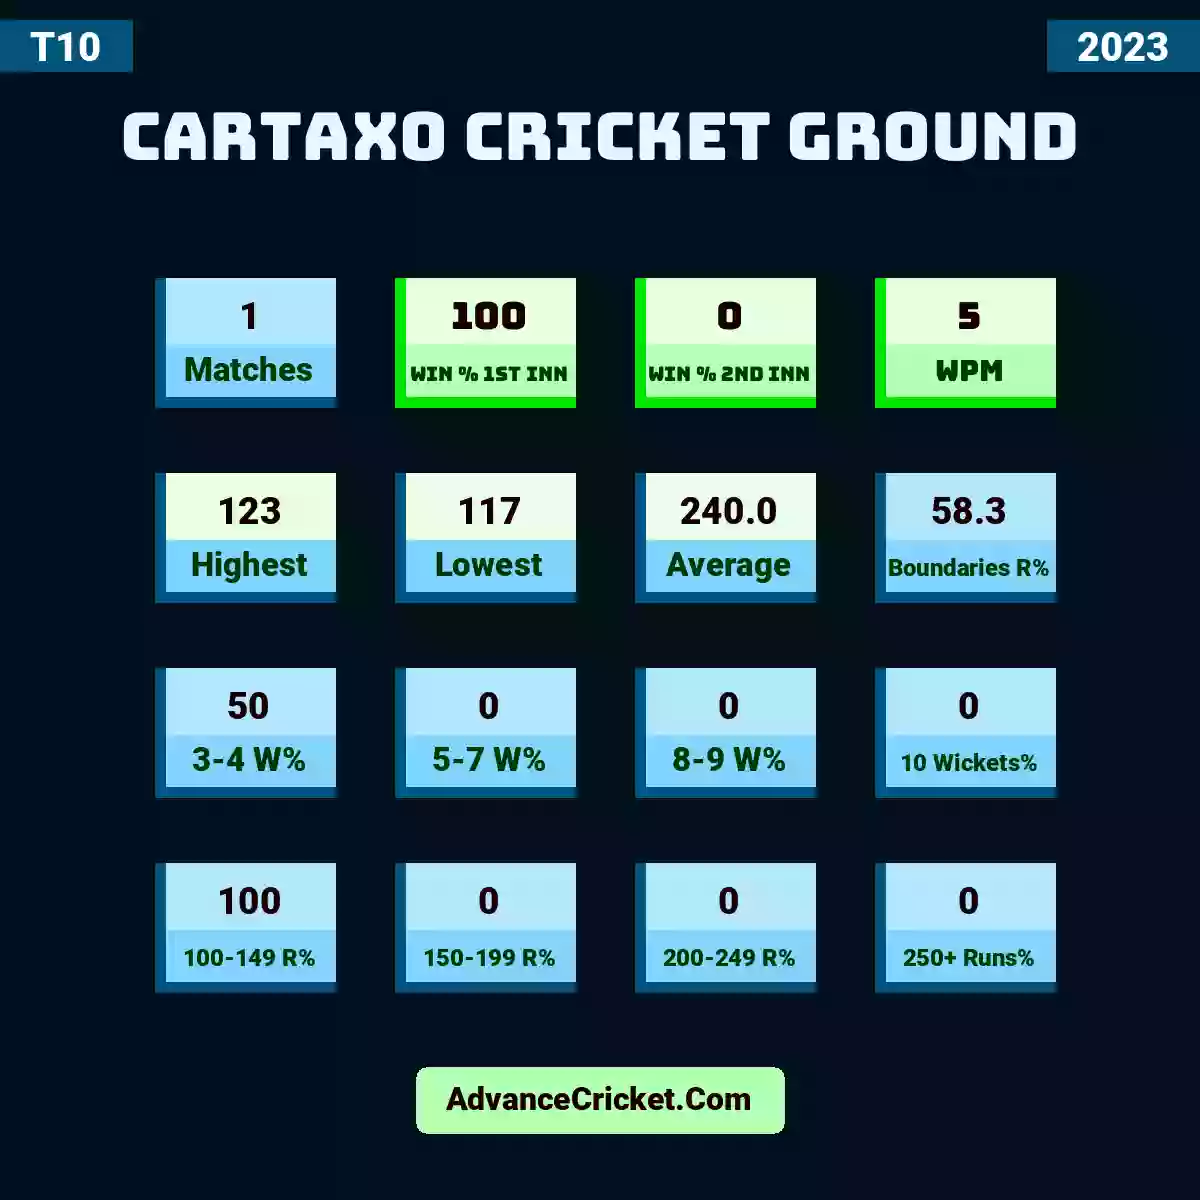 Image showing Cartaxo Cricket Ground with Matches: 1, Win % 1st Inn: 100, Win % 2nd Inn: 0, WPM: 5, Highest: 123, Lowest: 117, Average: 240.0, Boundaries R%: 58.3, 3-4 W%: 50, 5-7 W%: 0, 8-9 W%: 0, 10 Wickets%: 0, 100-149 R%: 100, 150-199 R%: 0, 200-249 R%: 0, 250+ Runs%: 0.